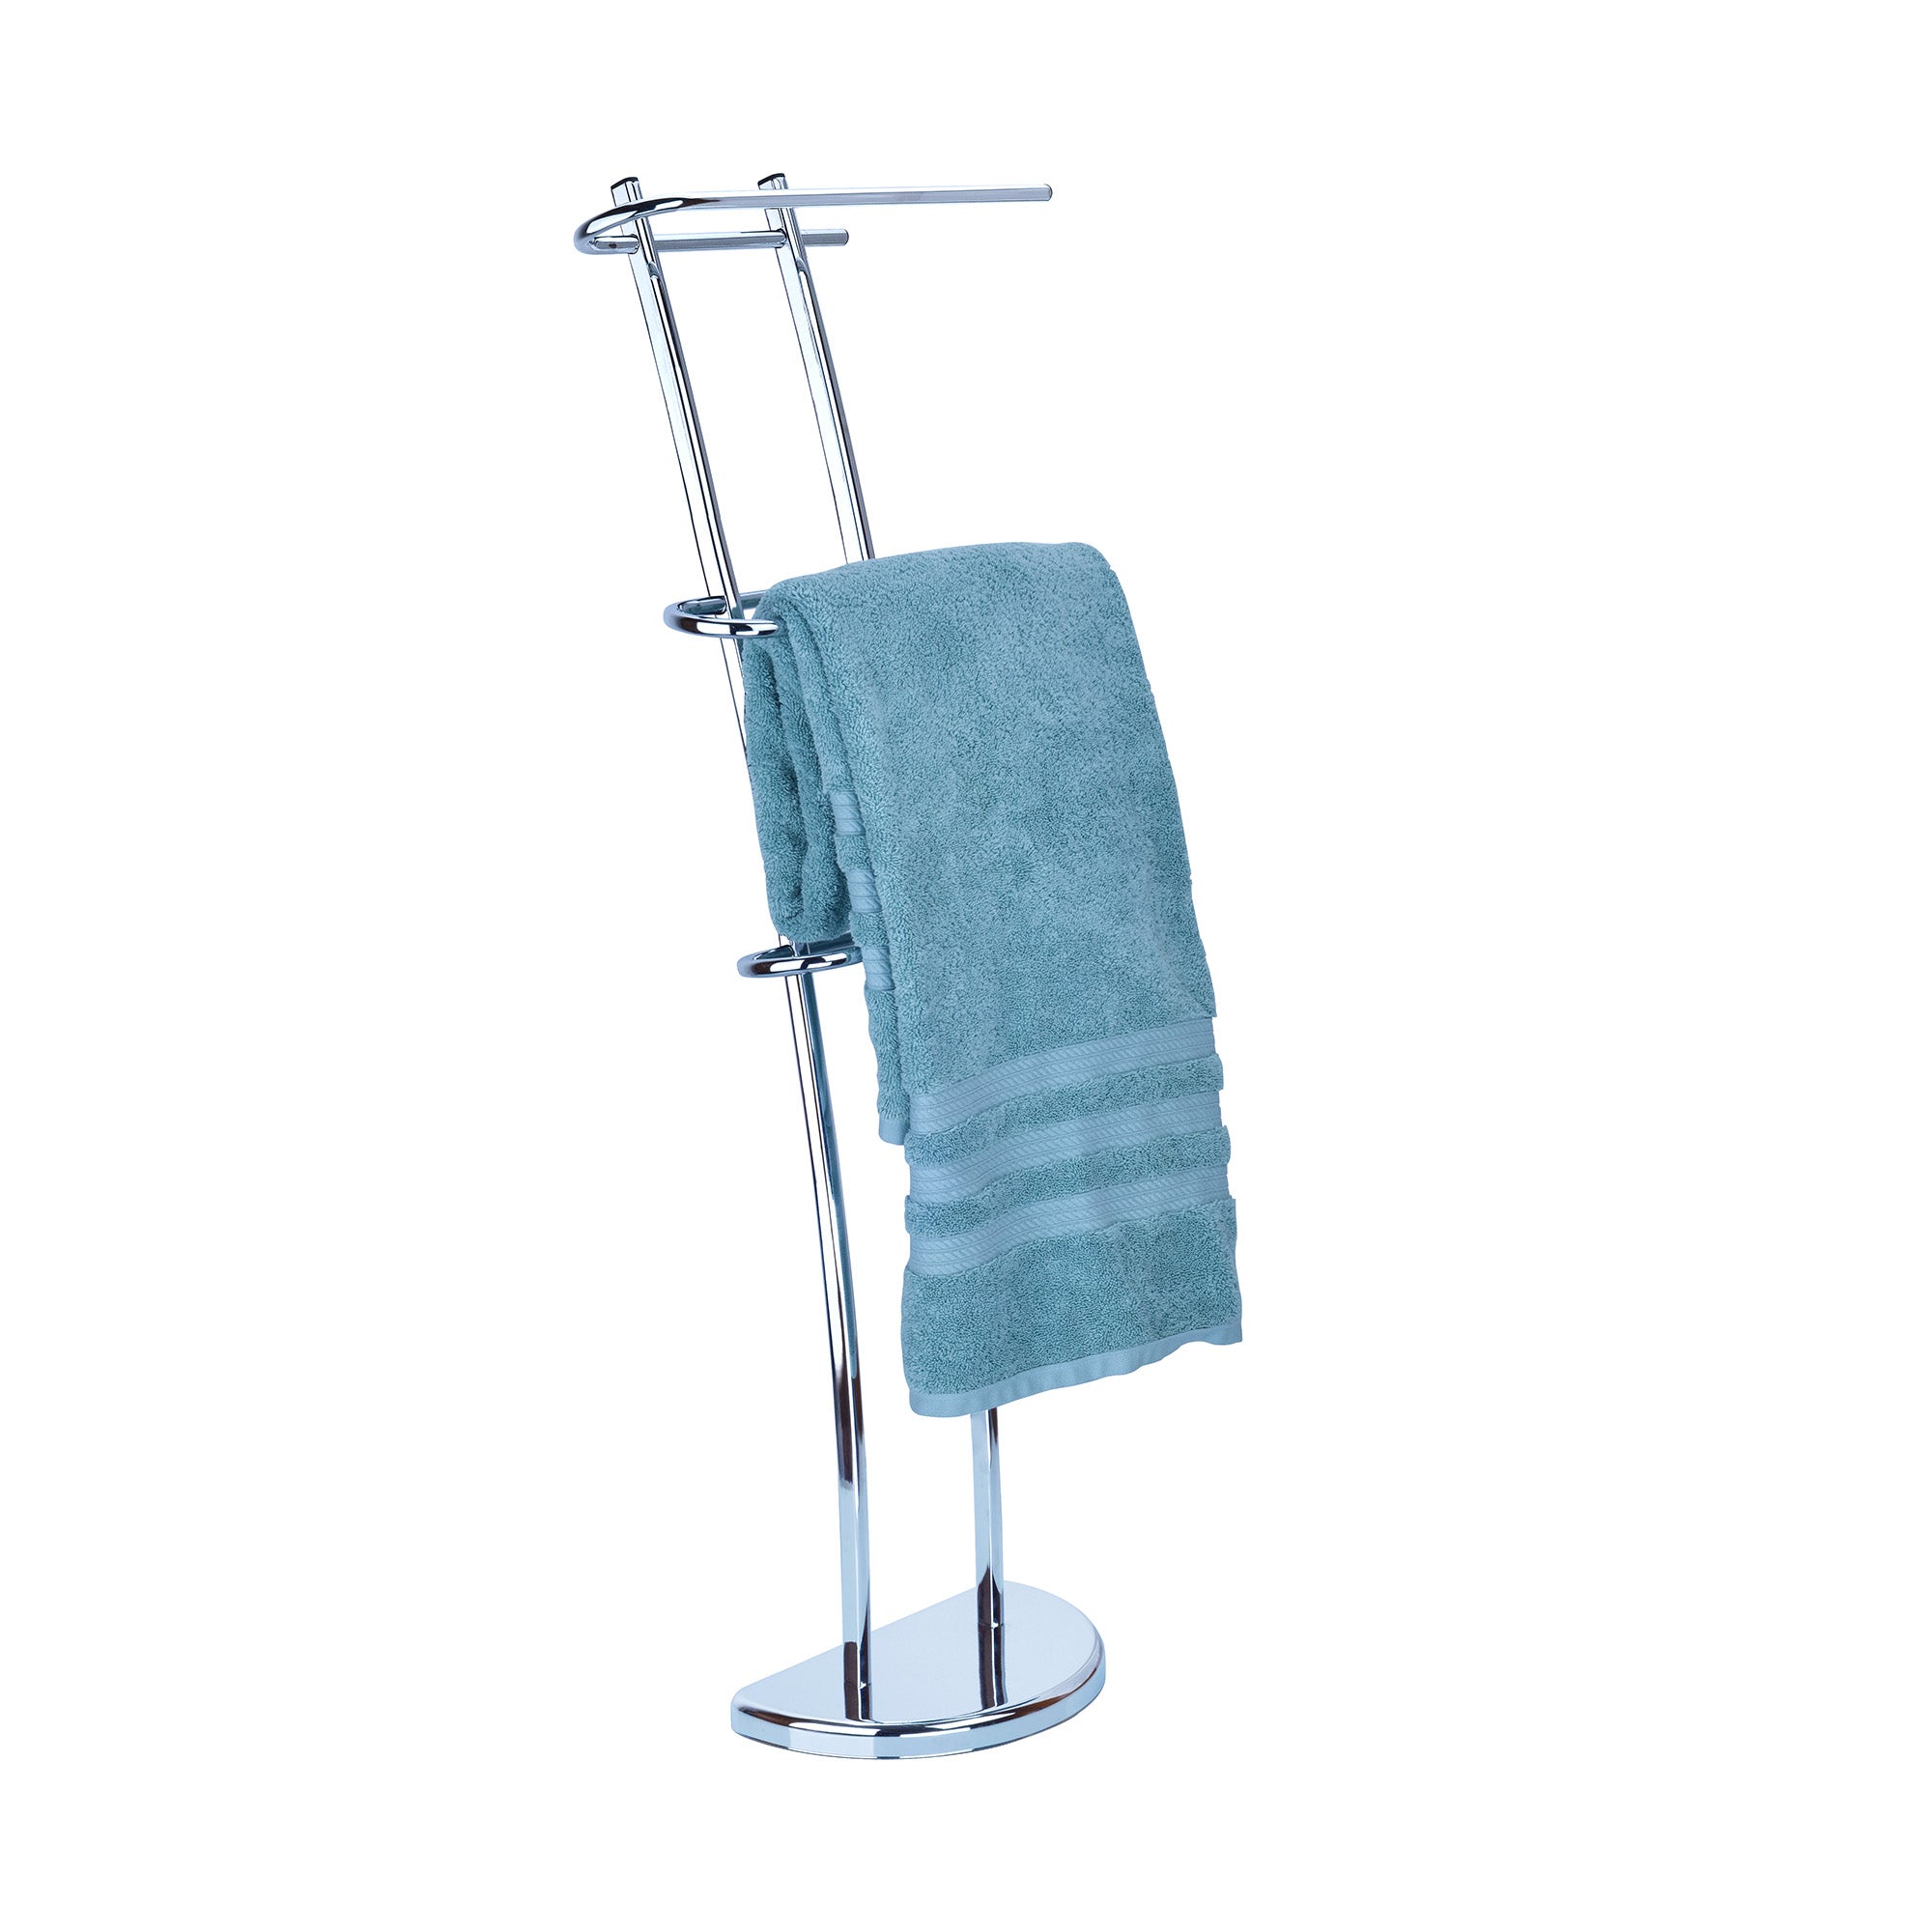 Standing Towel Rack, AN-40-873